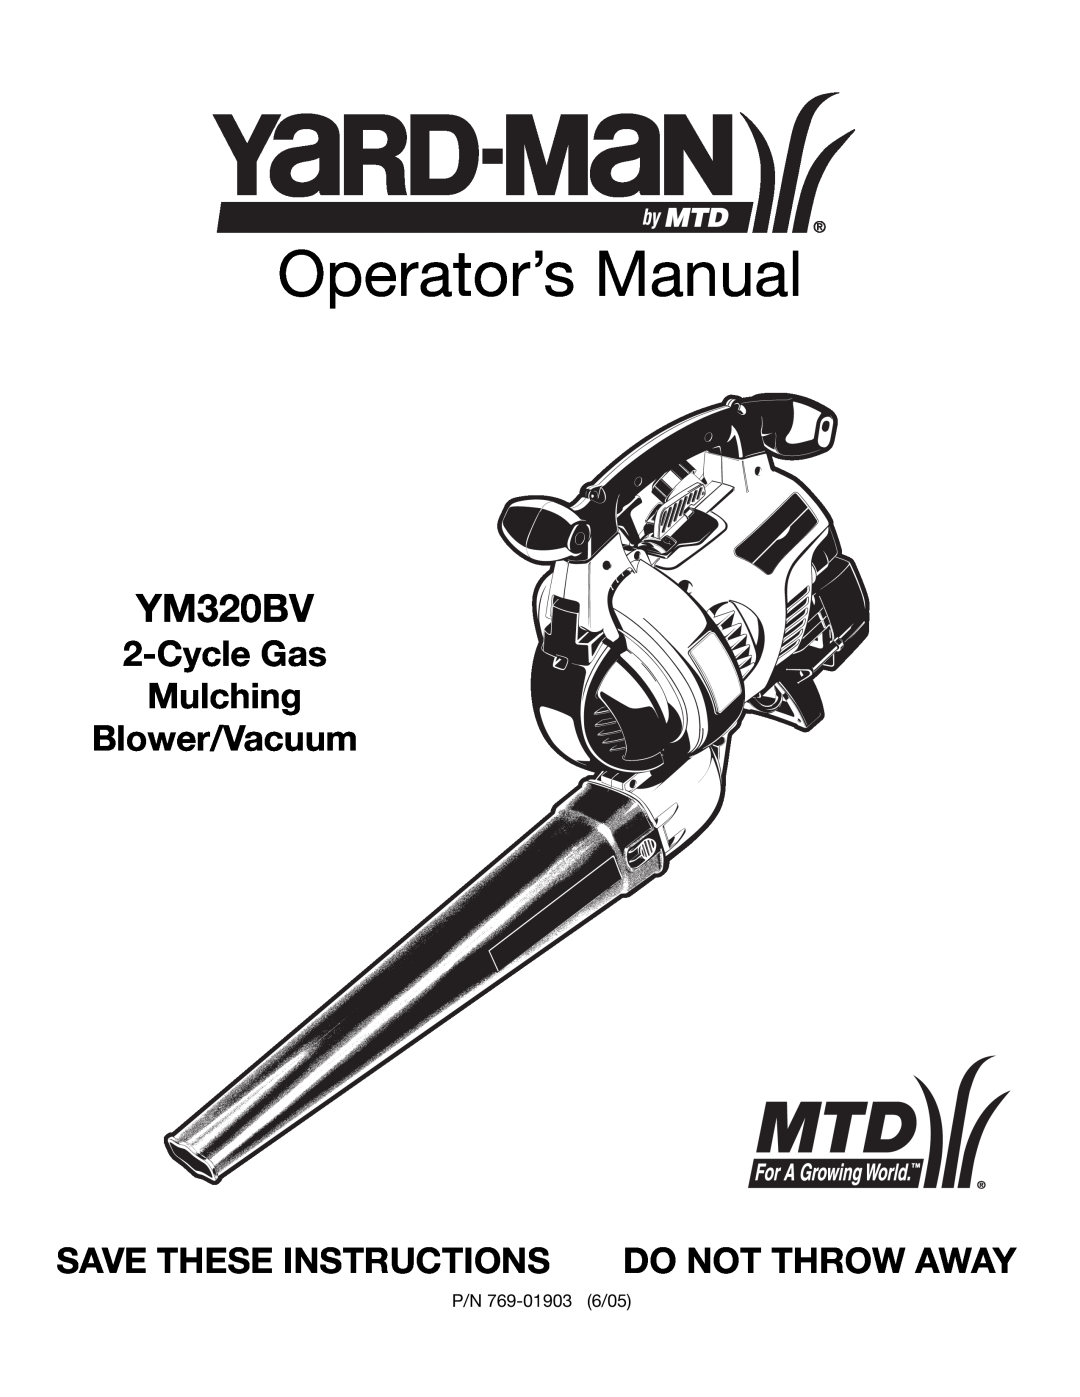 Bolens YM320BV manual Operator’s Manual, CycleGas Mulching Blower/Vacuum, Save These Instructions Do Not Throw Away 